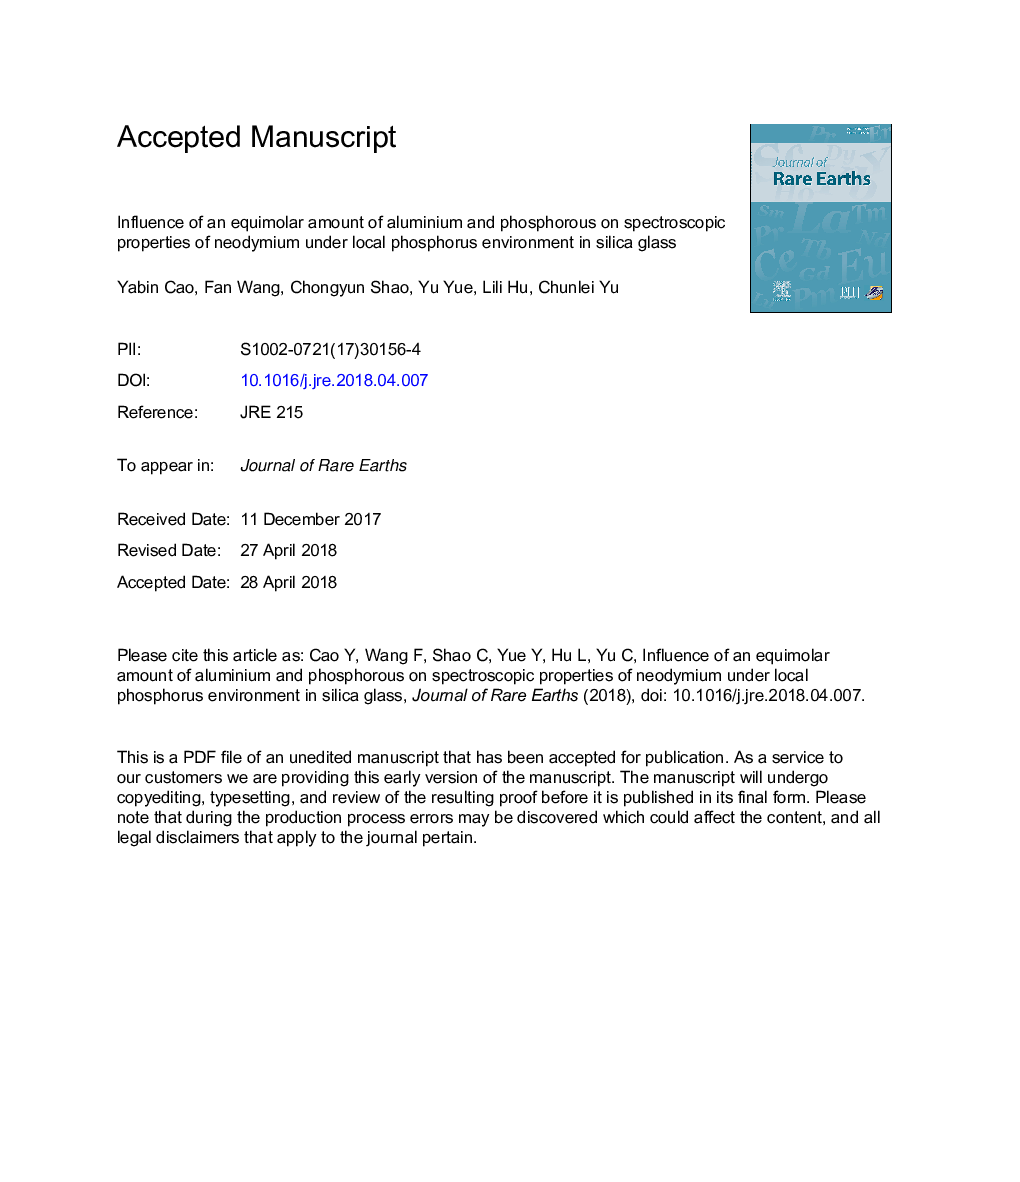 Influence of an equimolar amount of aluminium and phosphorus on spectroscopic properties of neodymium under local phosphorus environment in silica glass